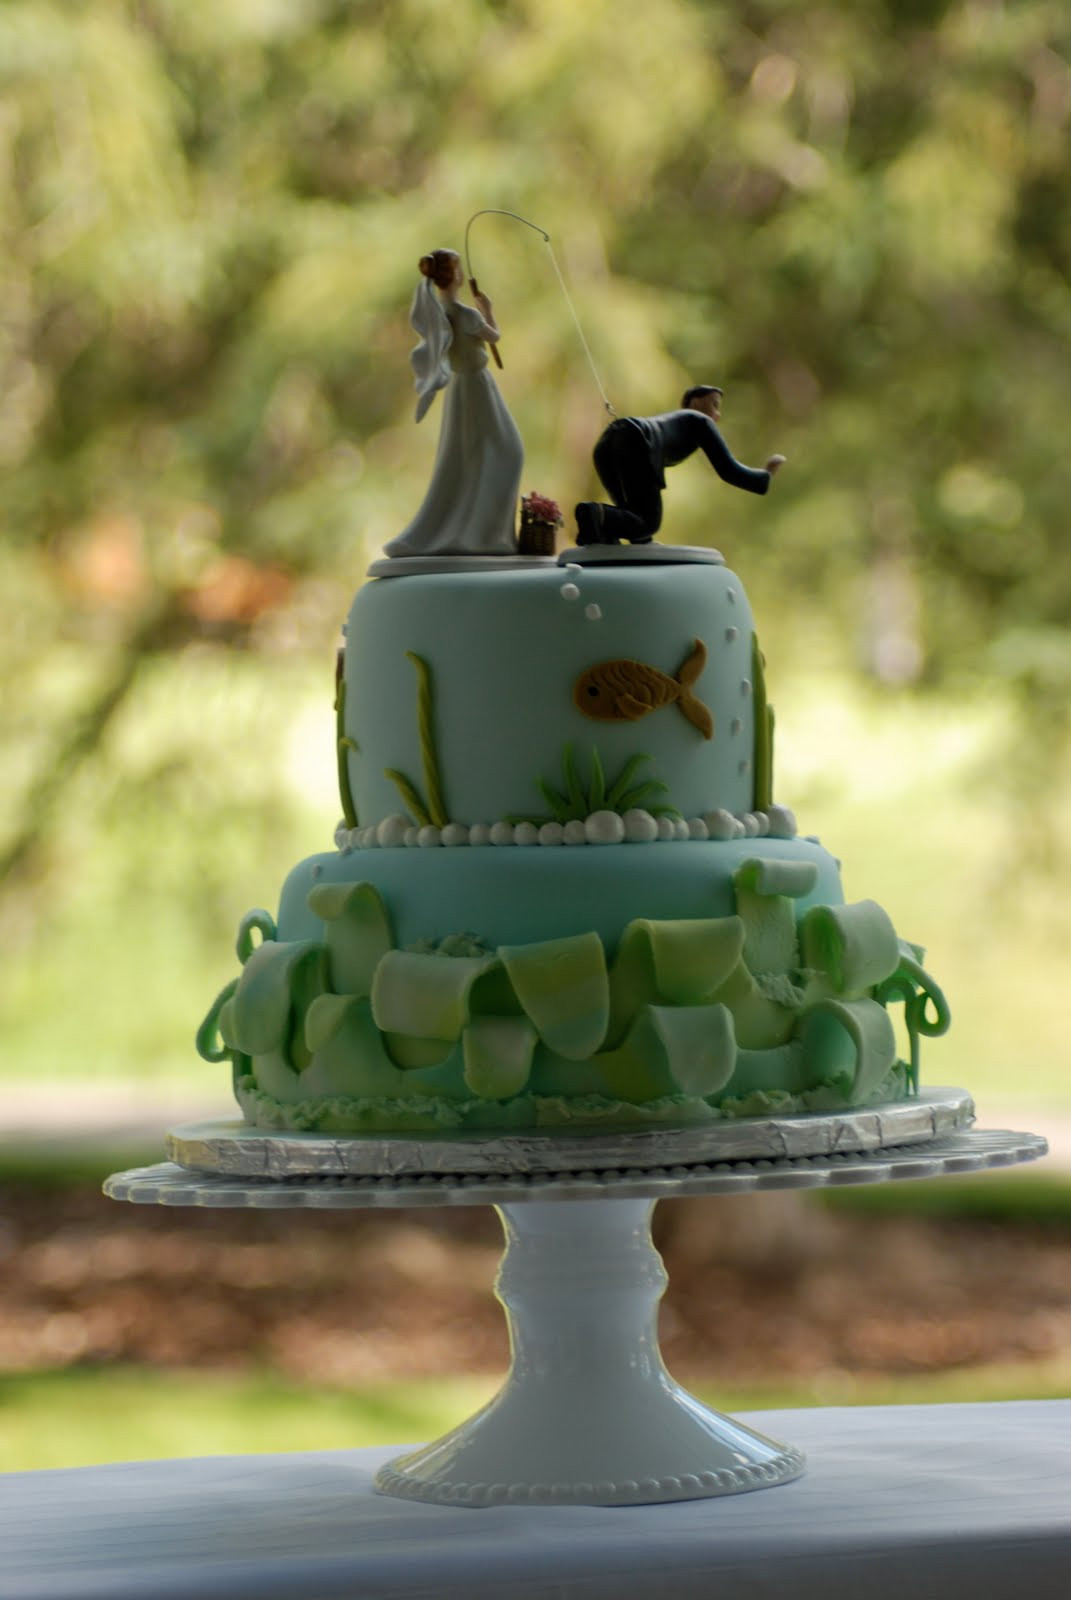 Fishing Themed Wedding Cakes
 Keith and Angela Latest wedding cake cupcakes